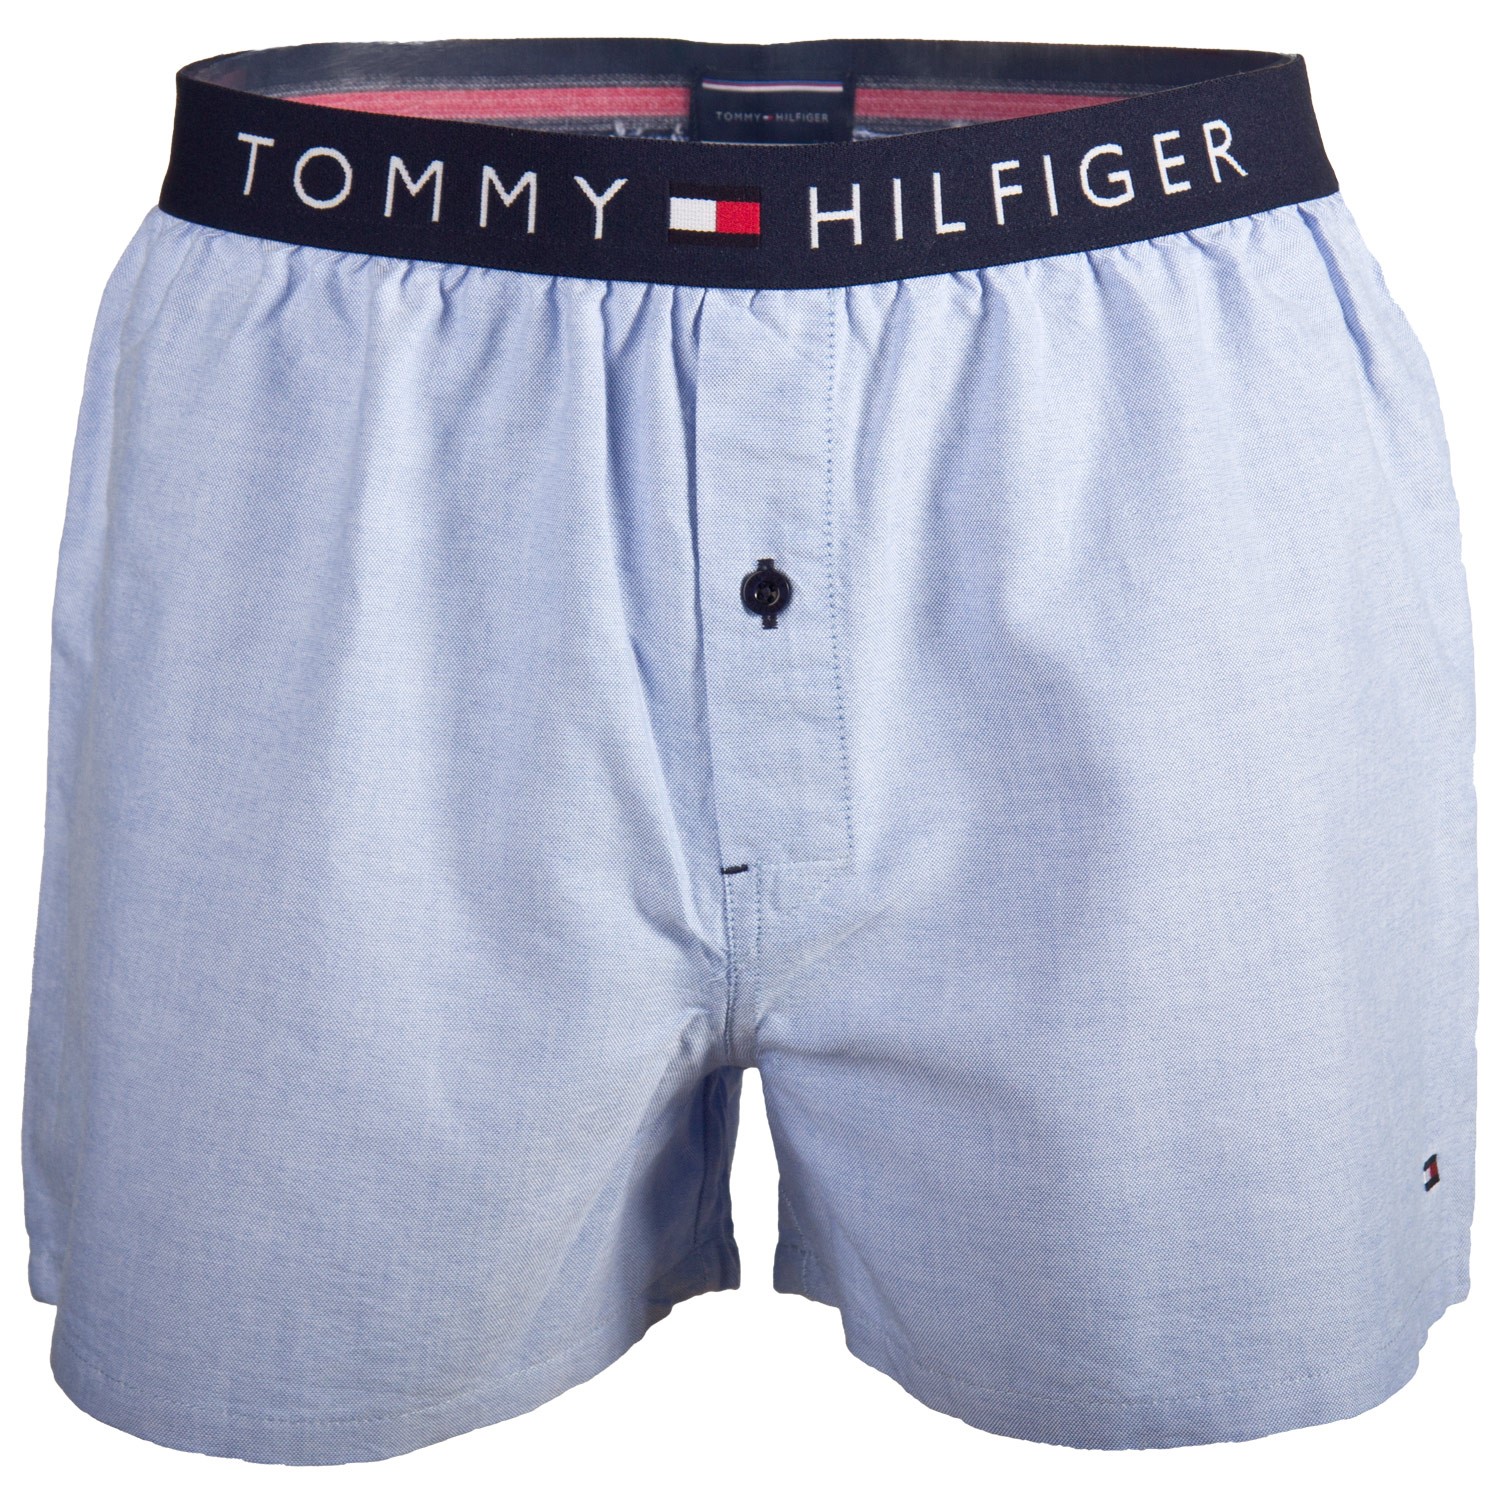 tommy hilfiger woven boxer shorts cheap 